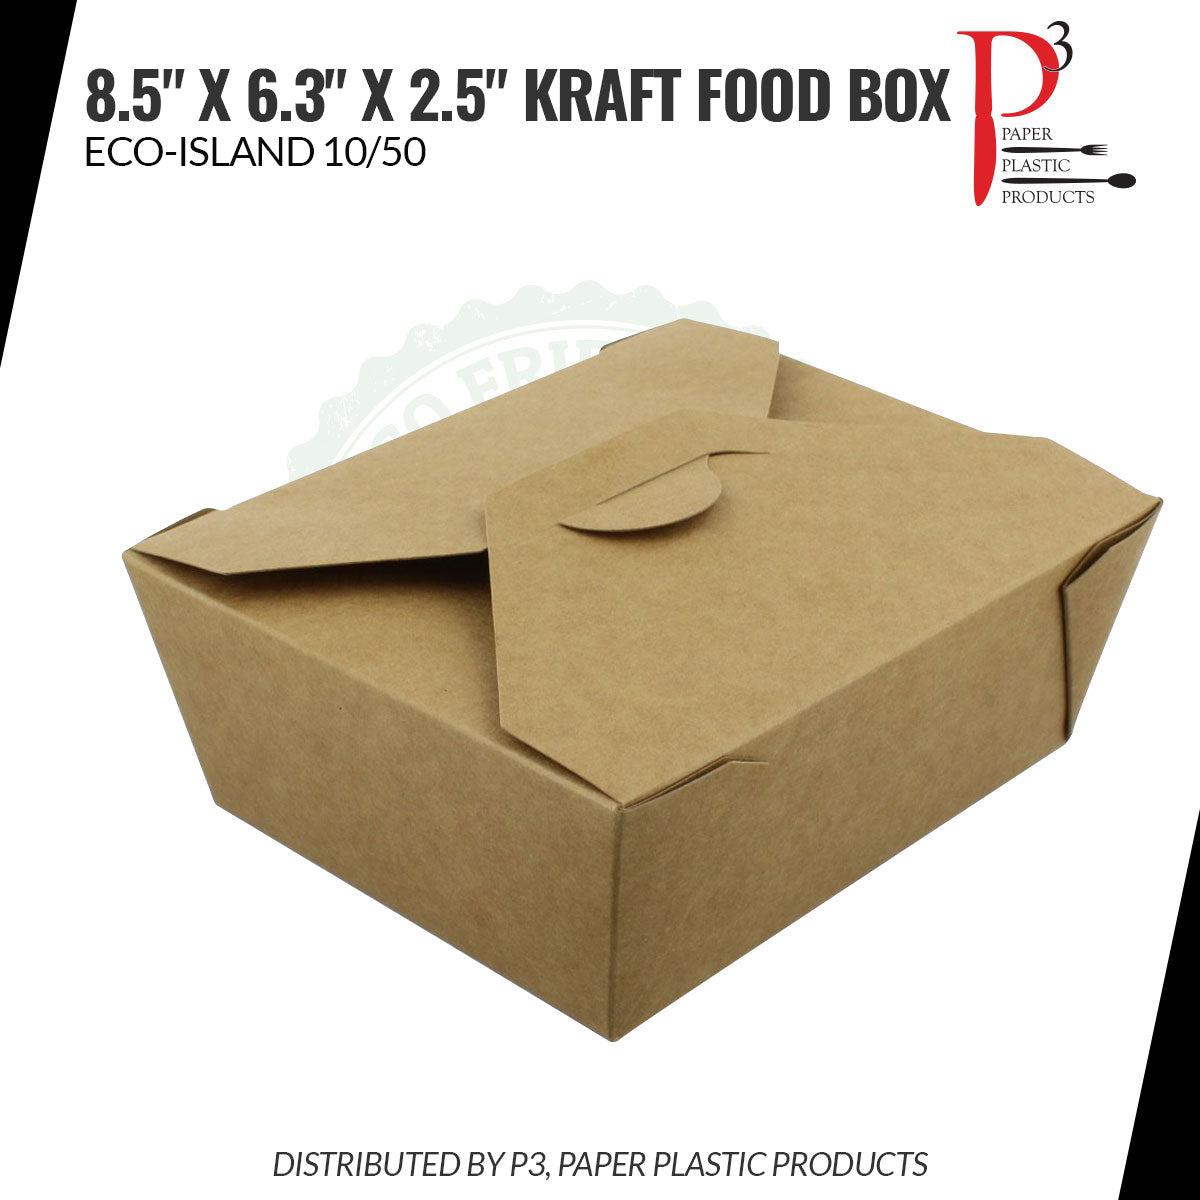 Kraft Food Box 8.5" x 6.3" x 2.5" Eco-Island 4/50